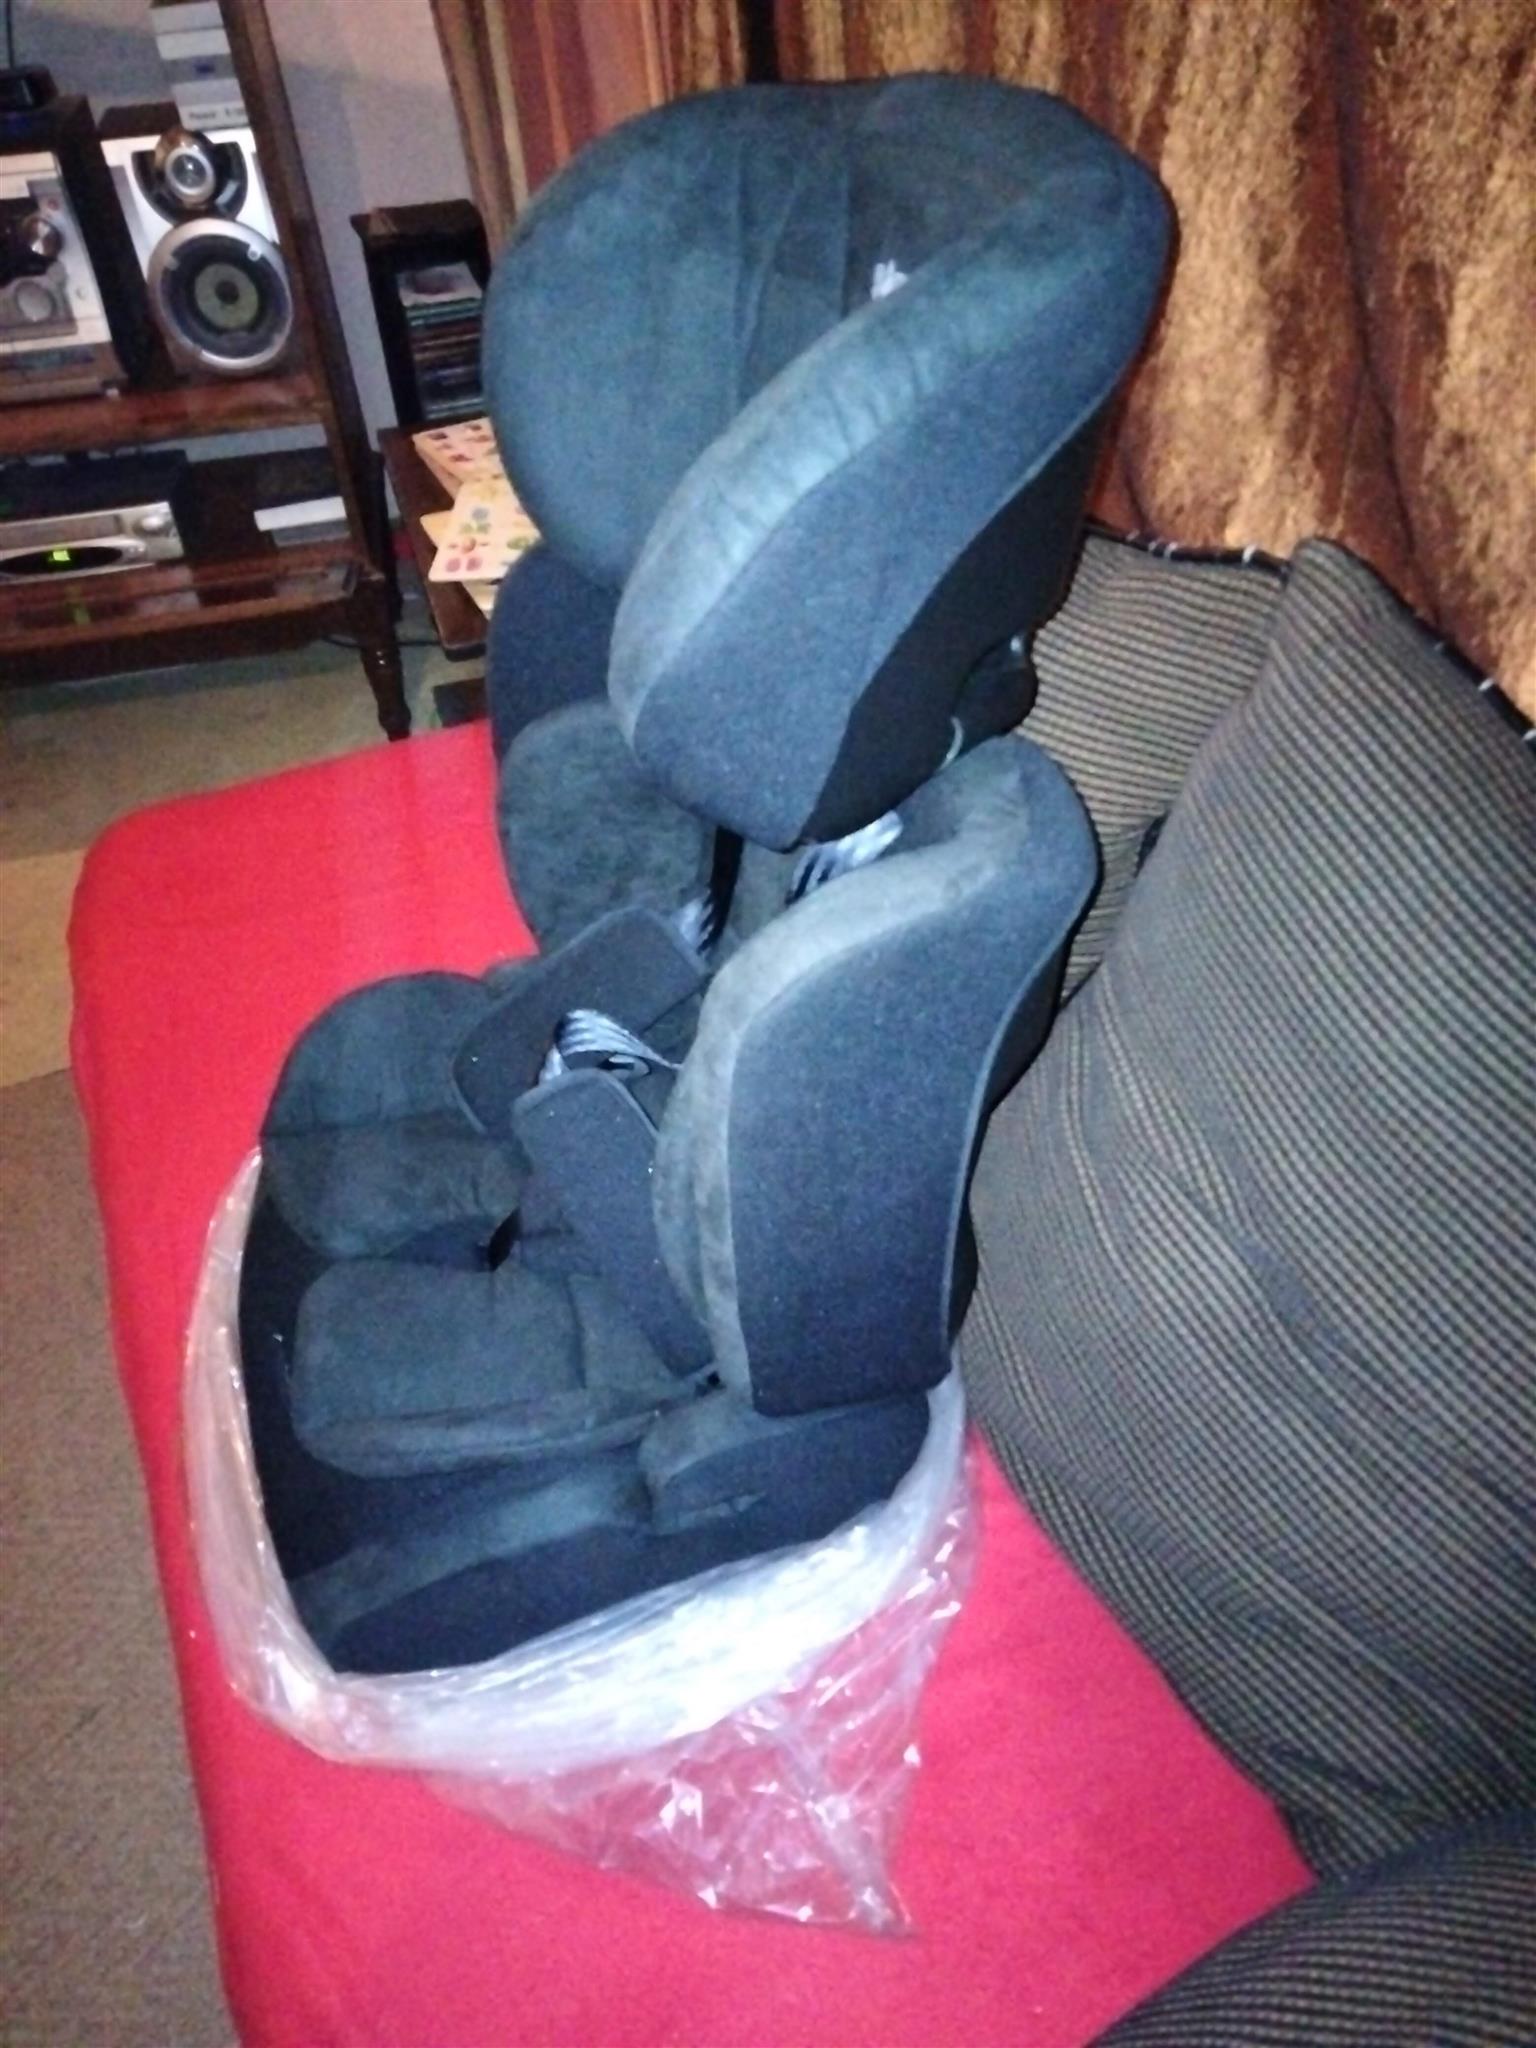 Cosmos Safeway new baby car seat 9_36kg